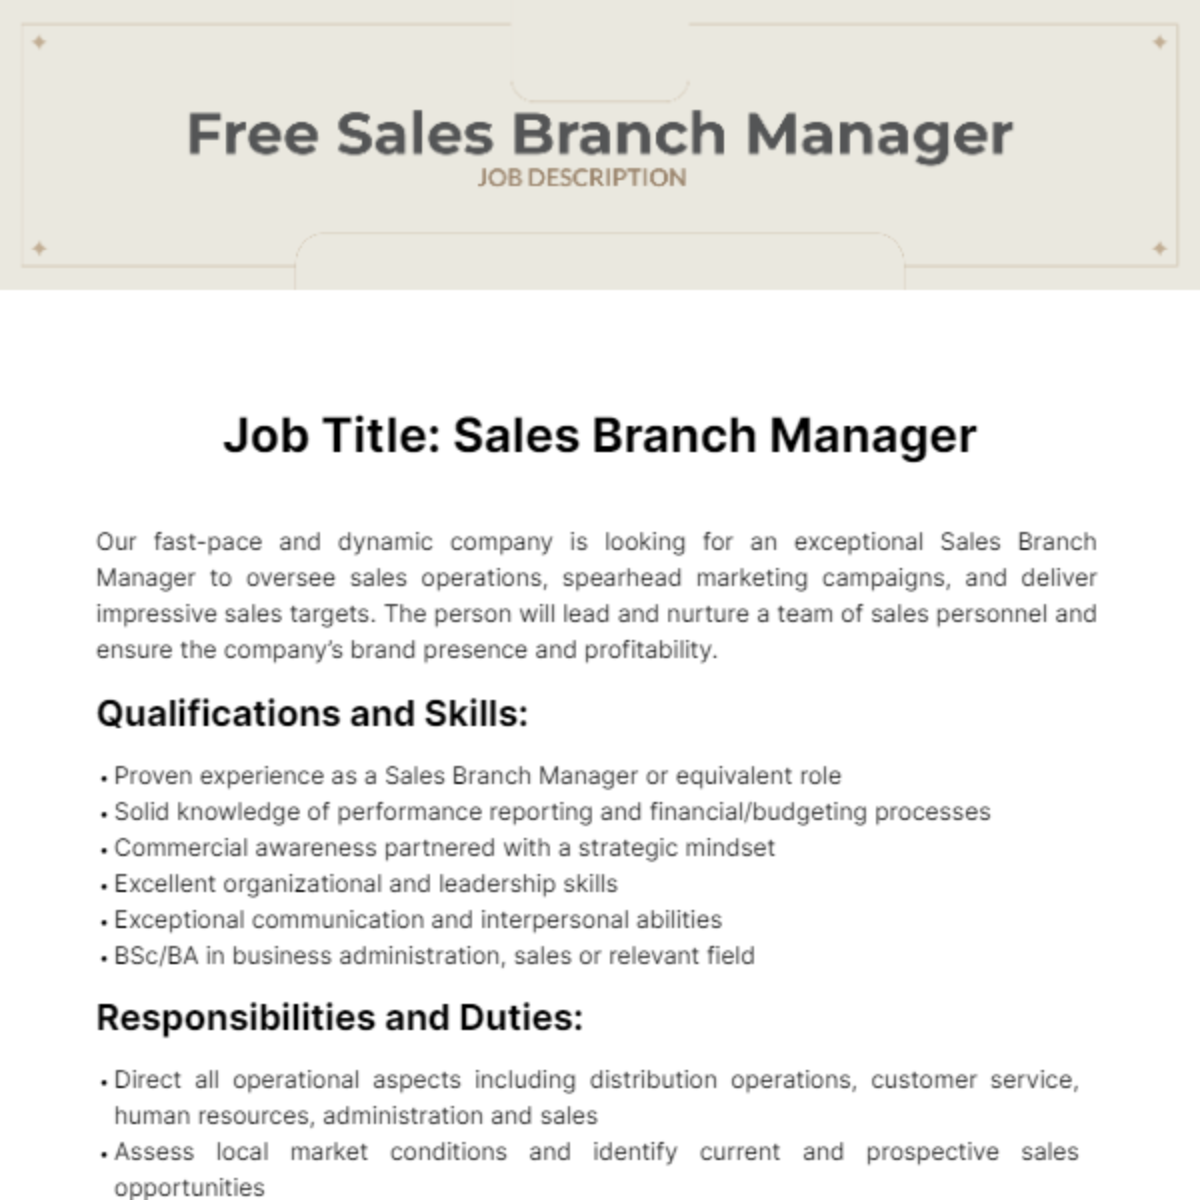 Free Sales Branch Manager Job Description Template